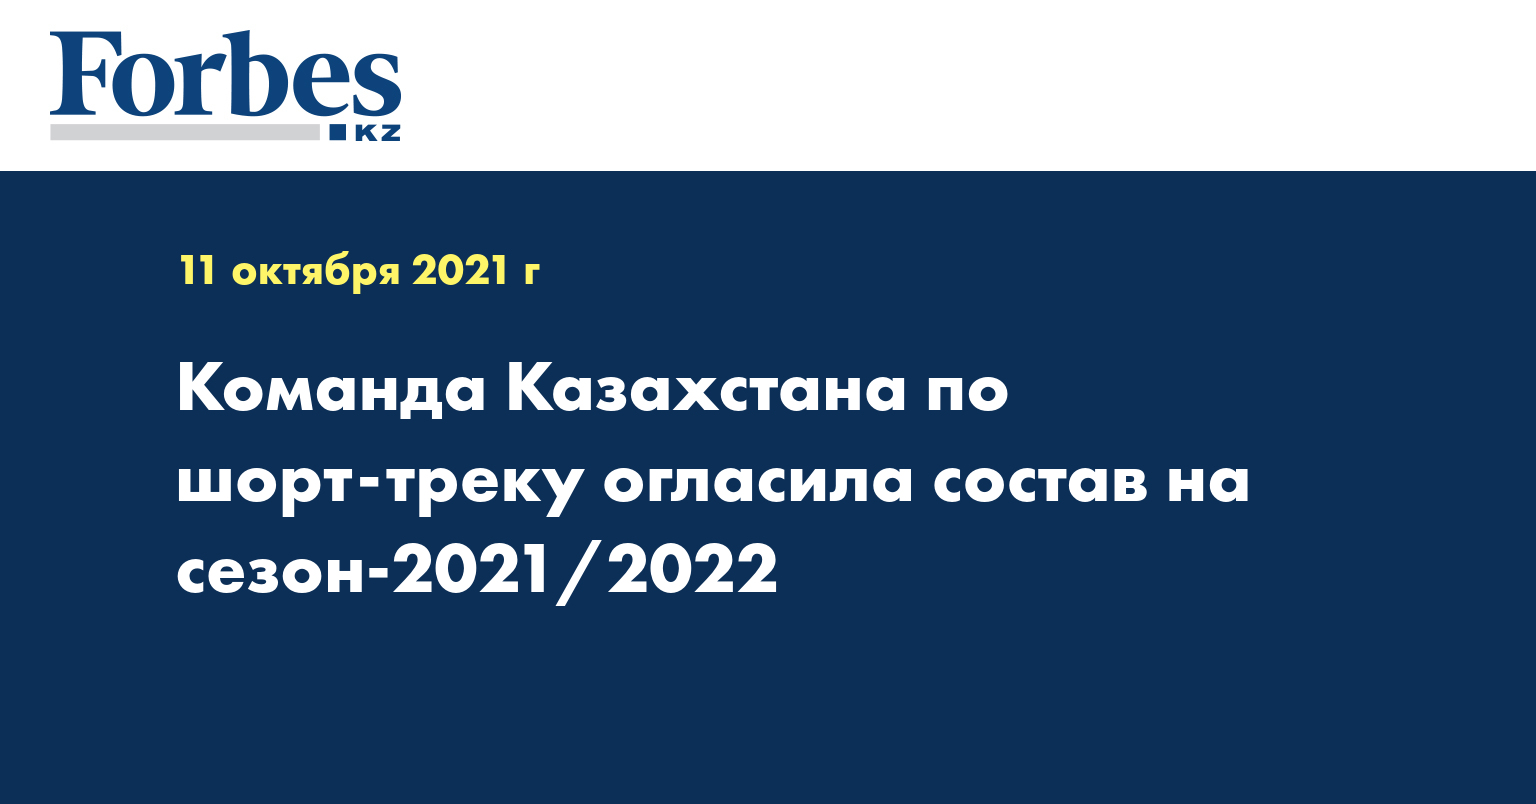  Команда Казахстана по шорт-треку огласила состав на сезон-2021/2022